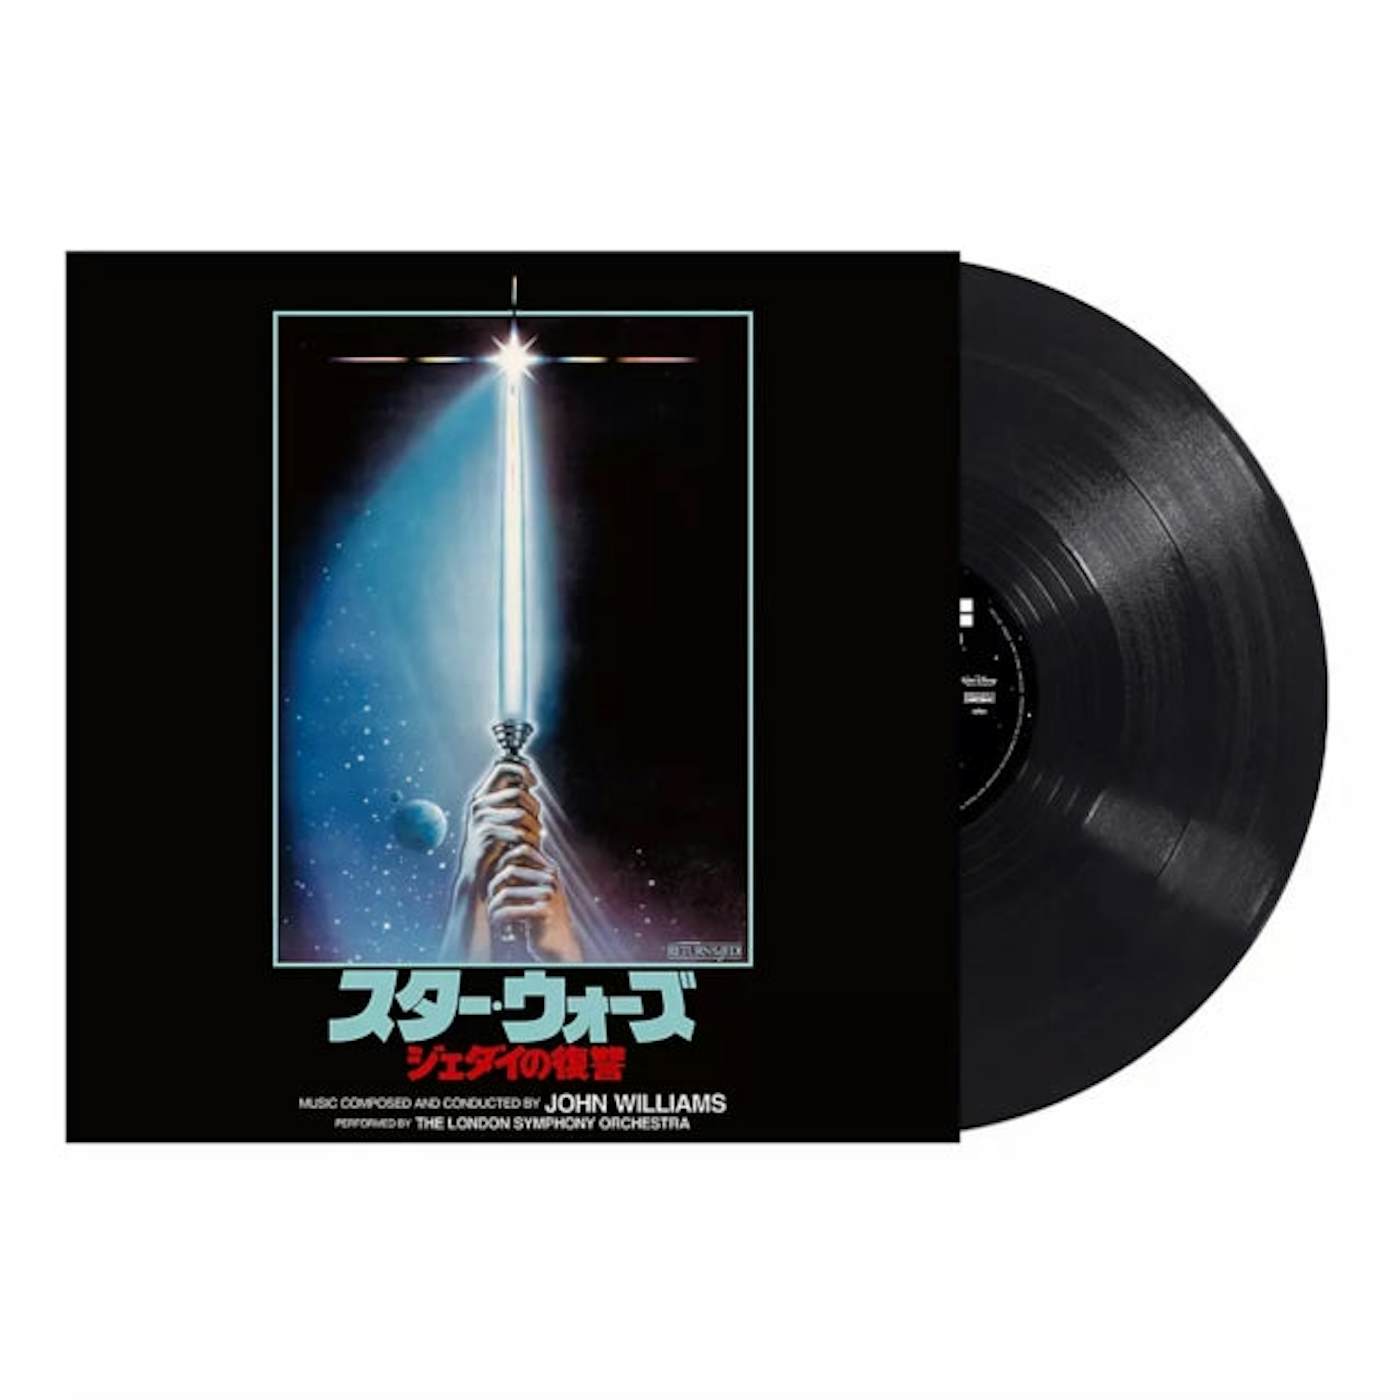 John Williams LP Vinyl Record - Star Wars: Return Of The Jedi - Original Soundtrack